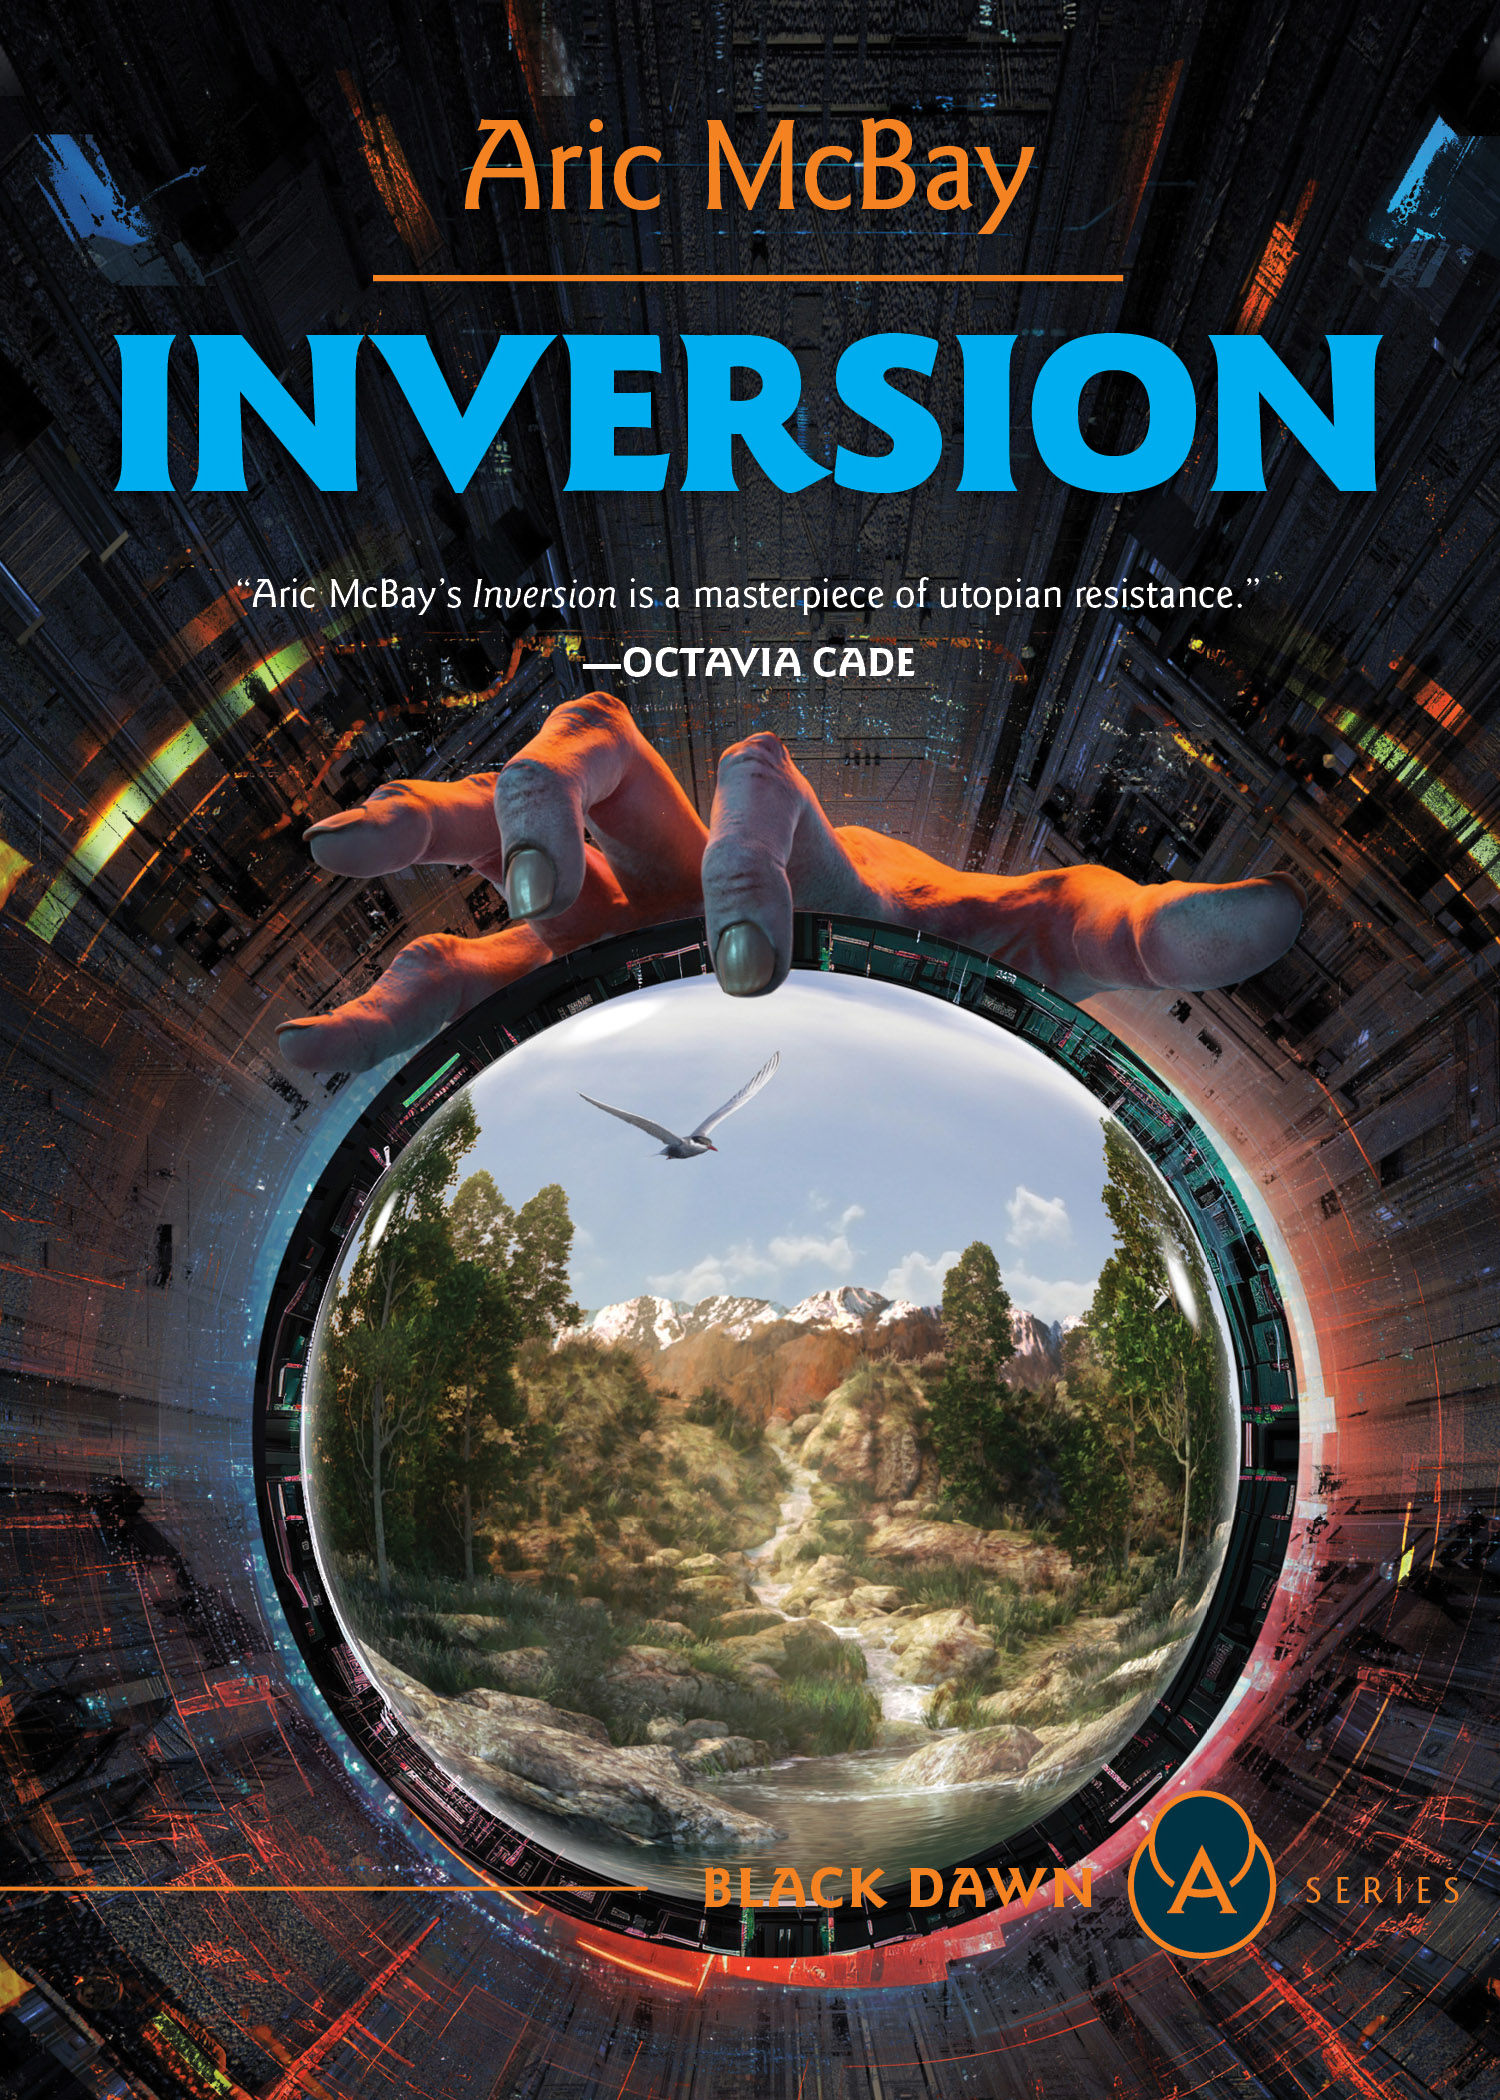 Inversions (novel) - Wikipedia